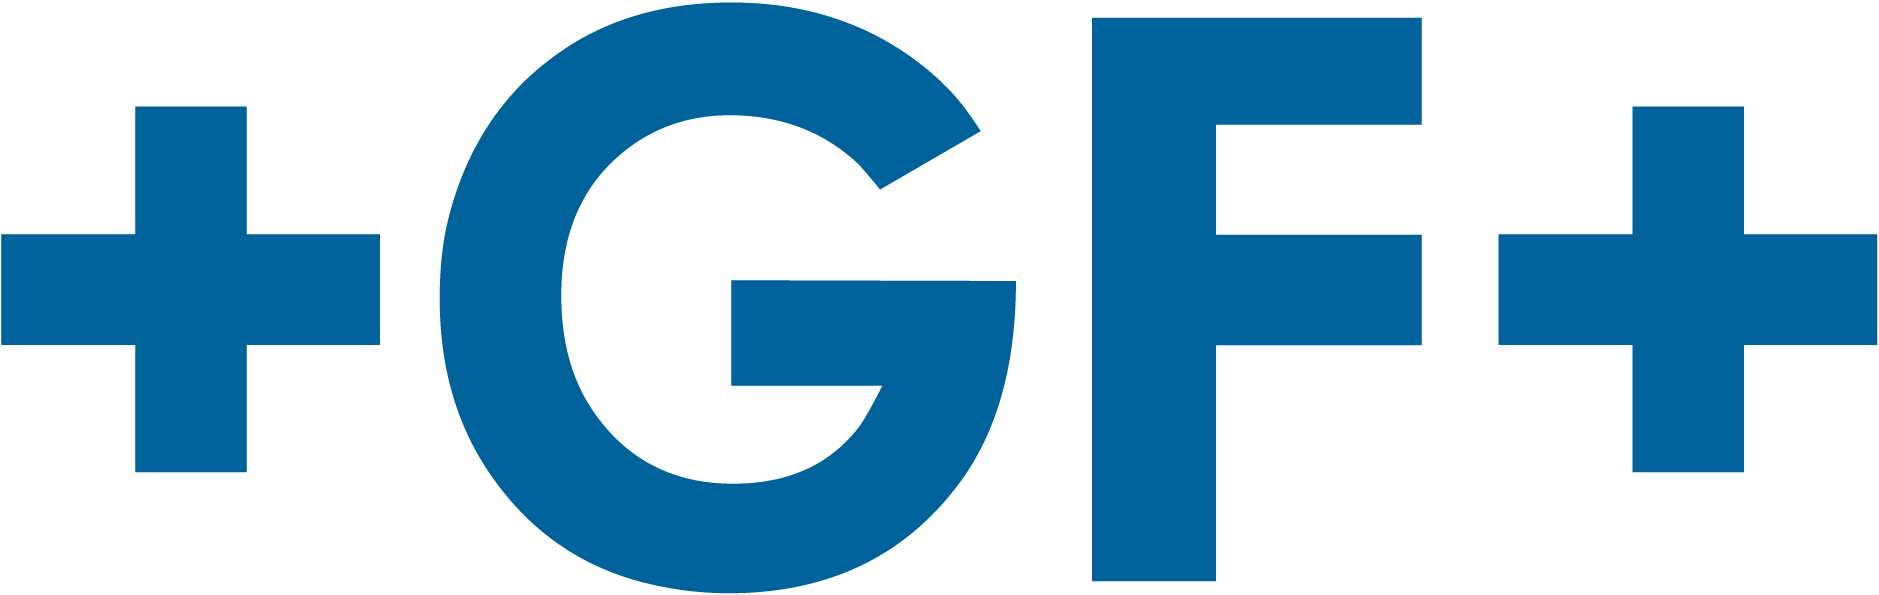 Georg Fischer Piping Systems Ltd.